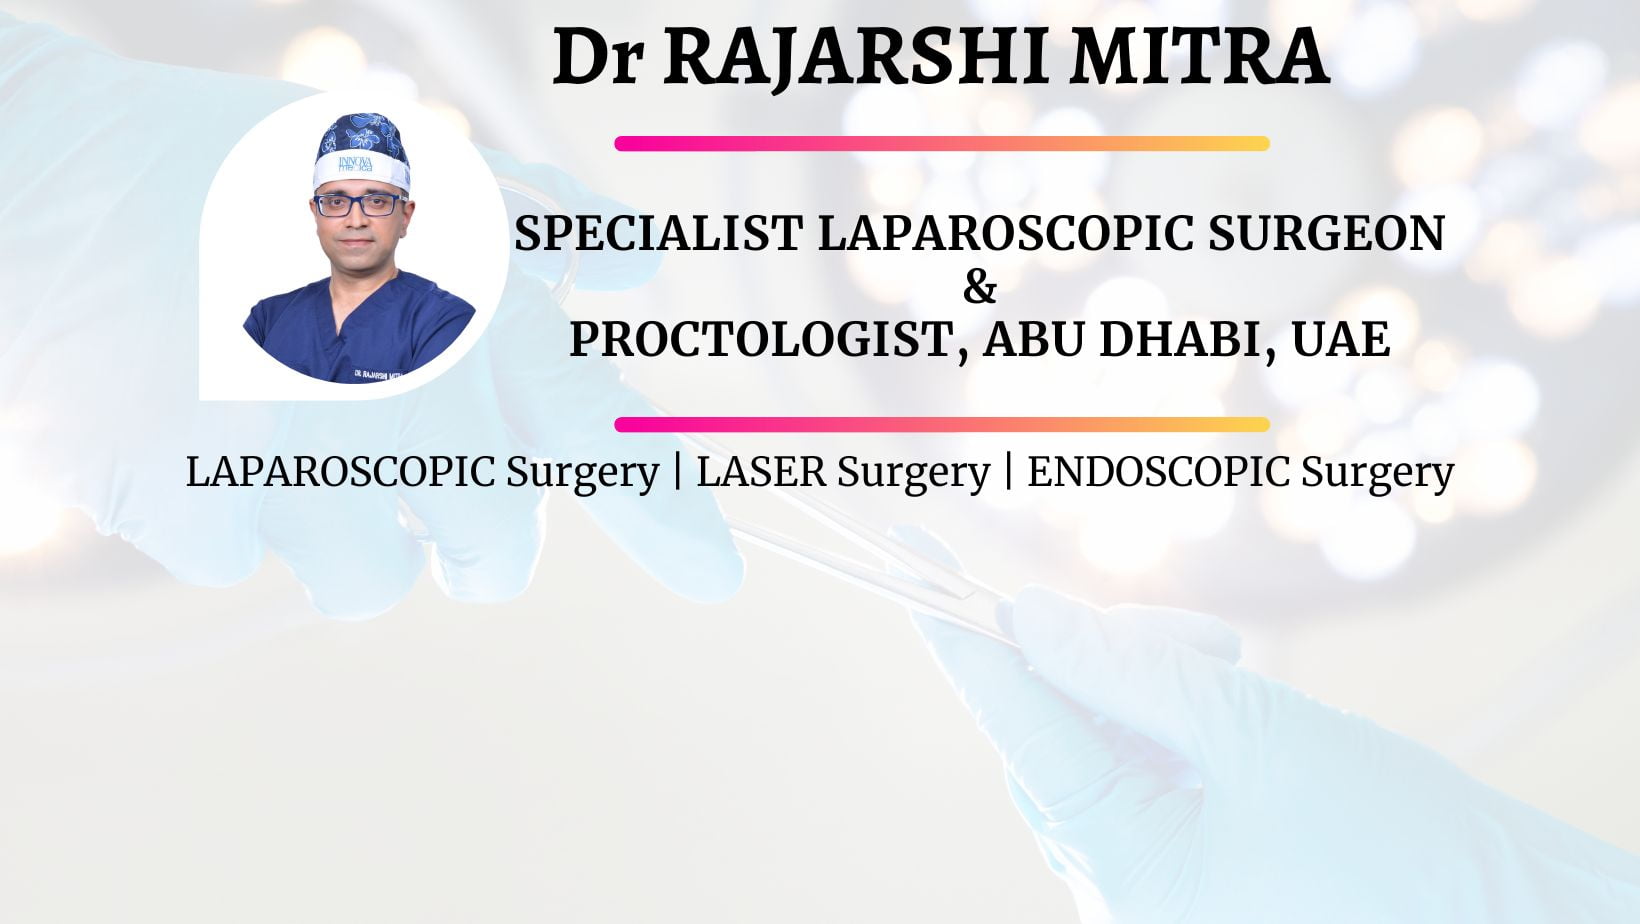 Dr Rajarshi Mitra FaceBook Cover New 2